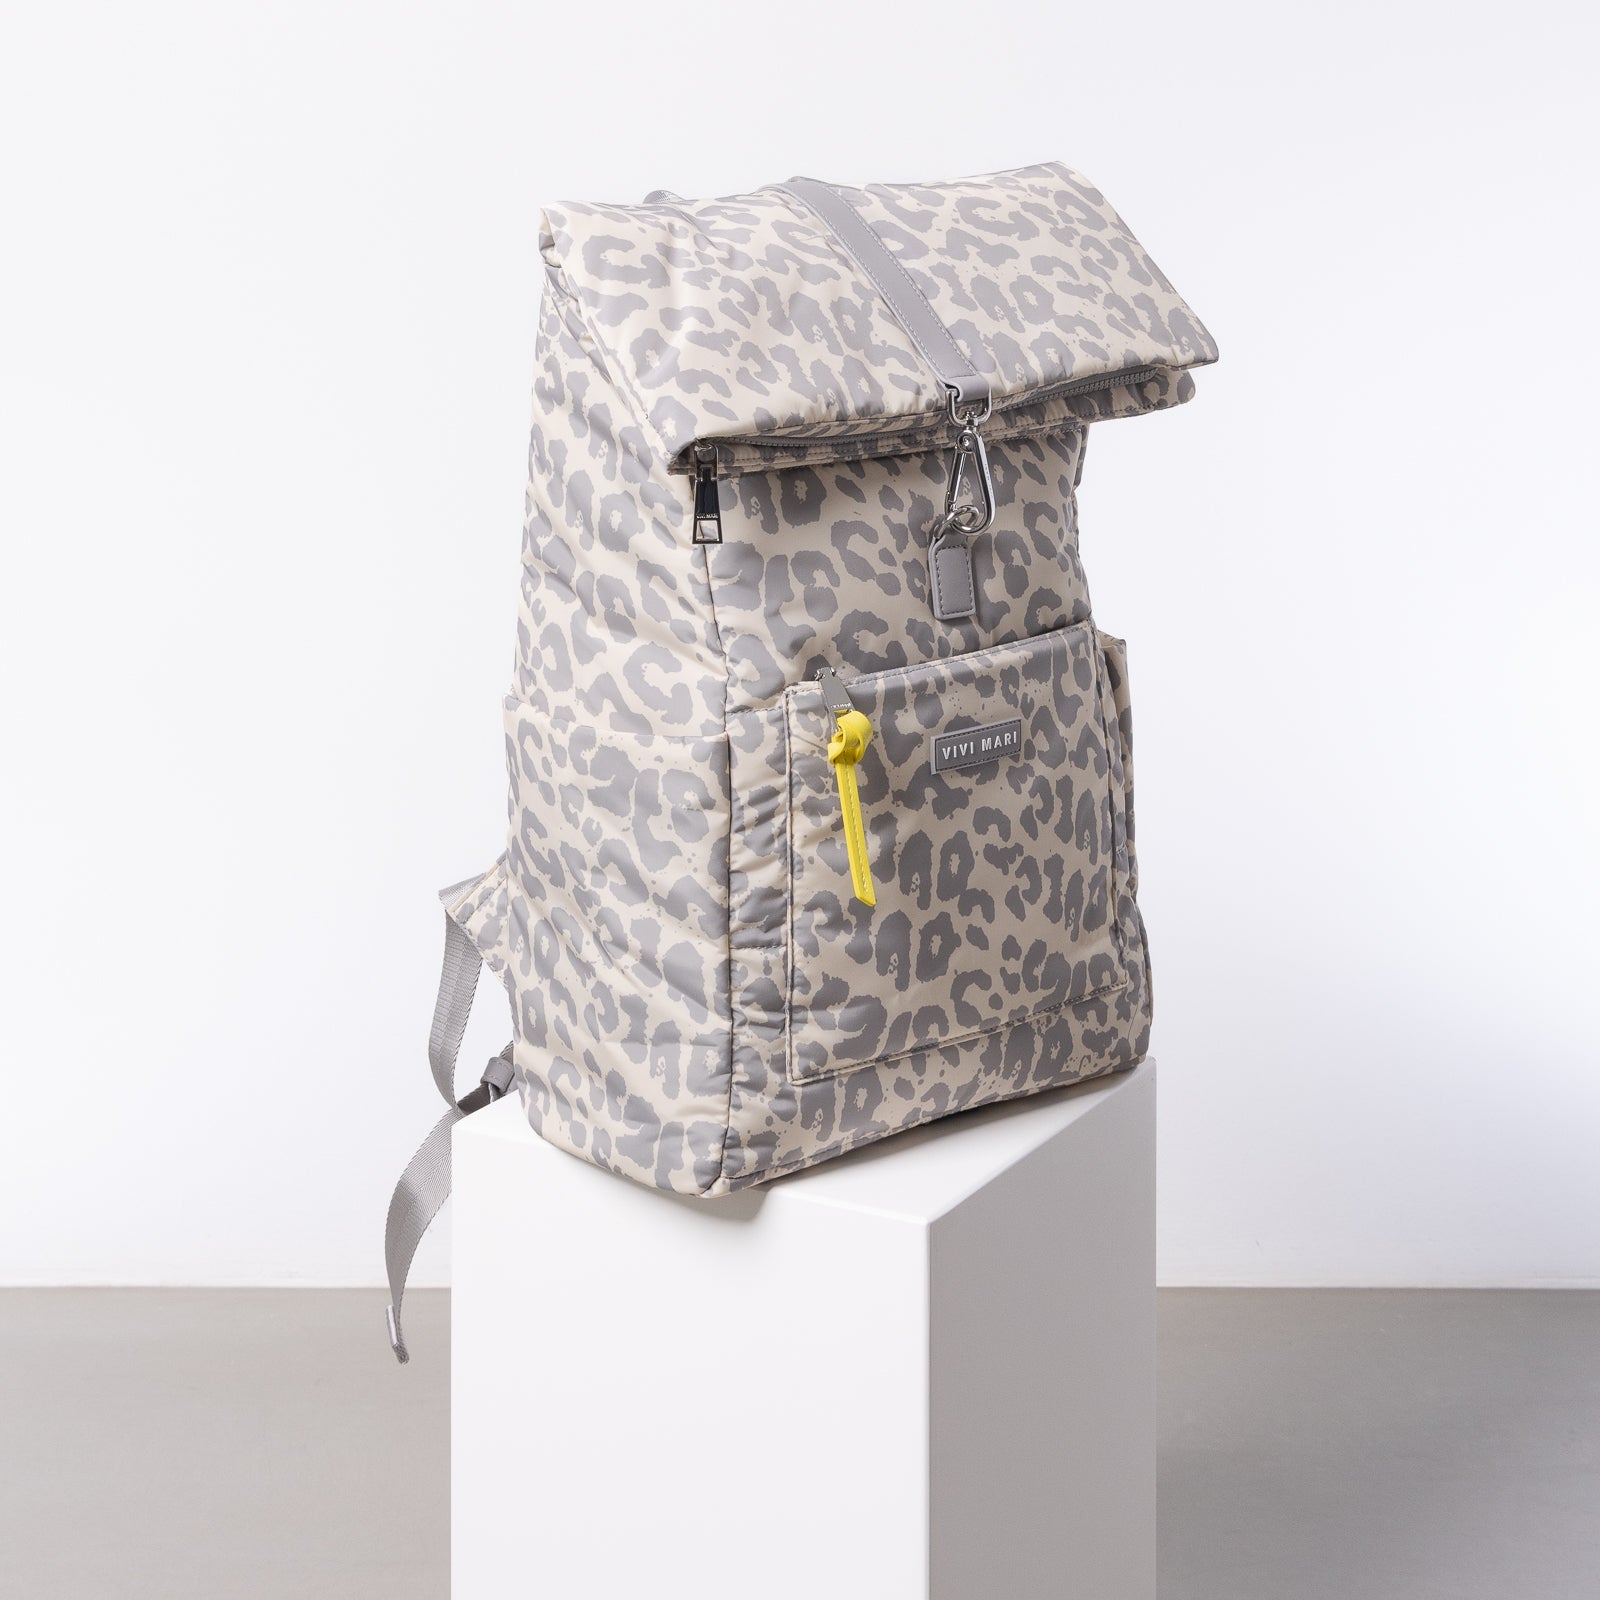 Padded Backpack medium - leo splashes grey/sand - VIVI MARI